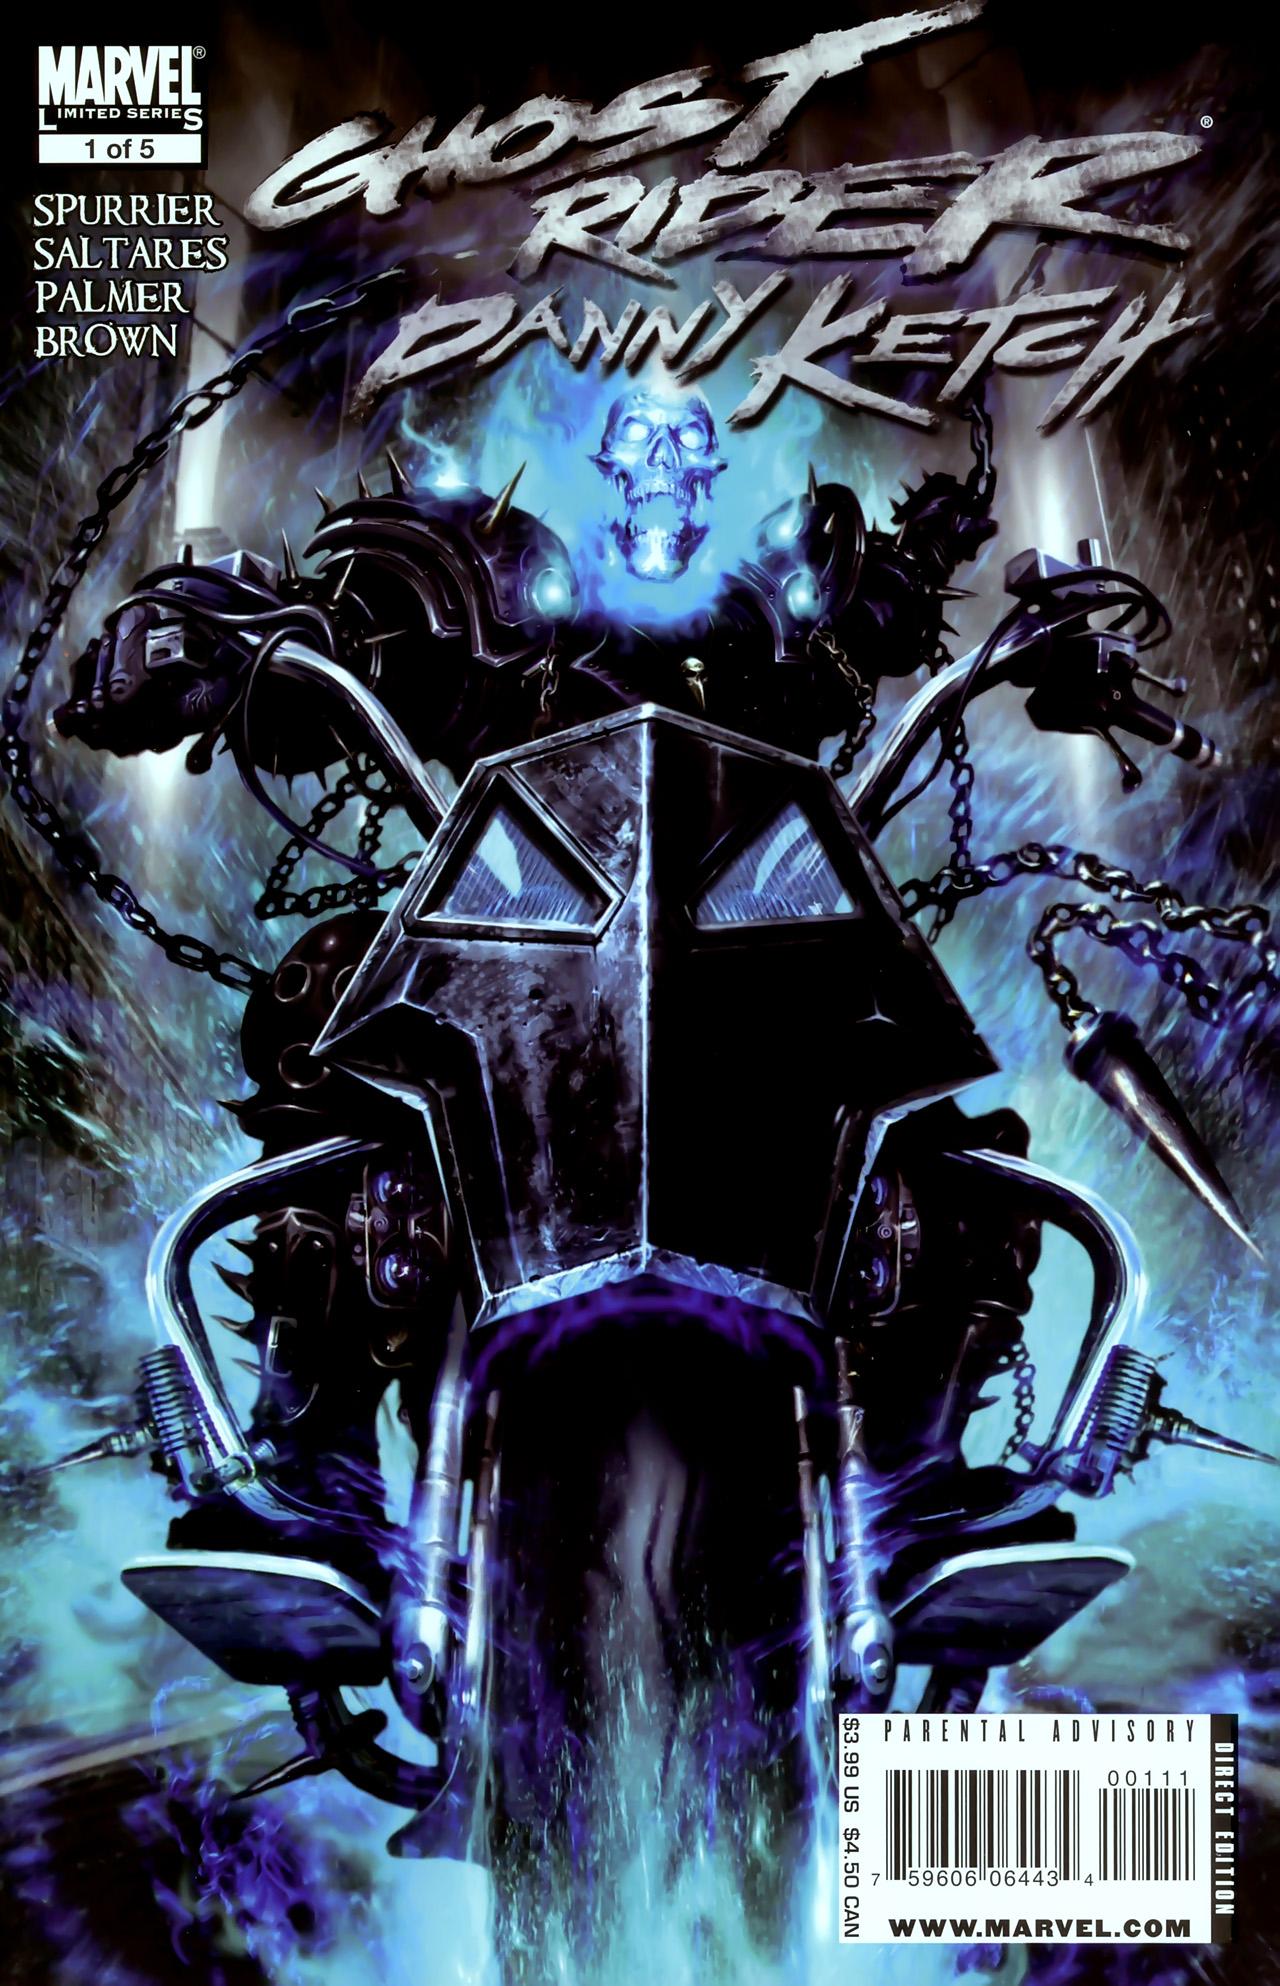 Ghost Rider: Danny Ketch Vol. 1 #1